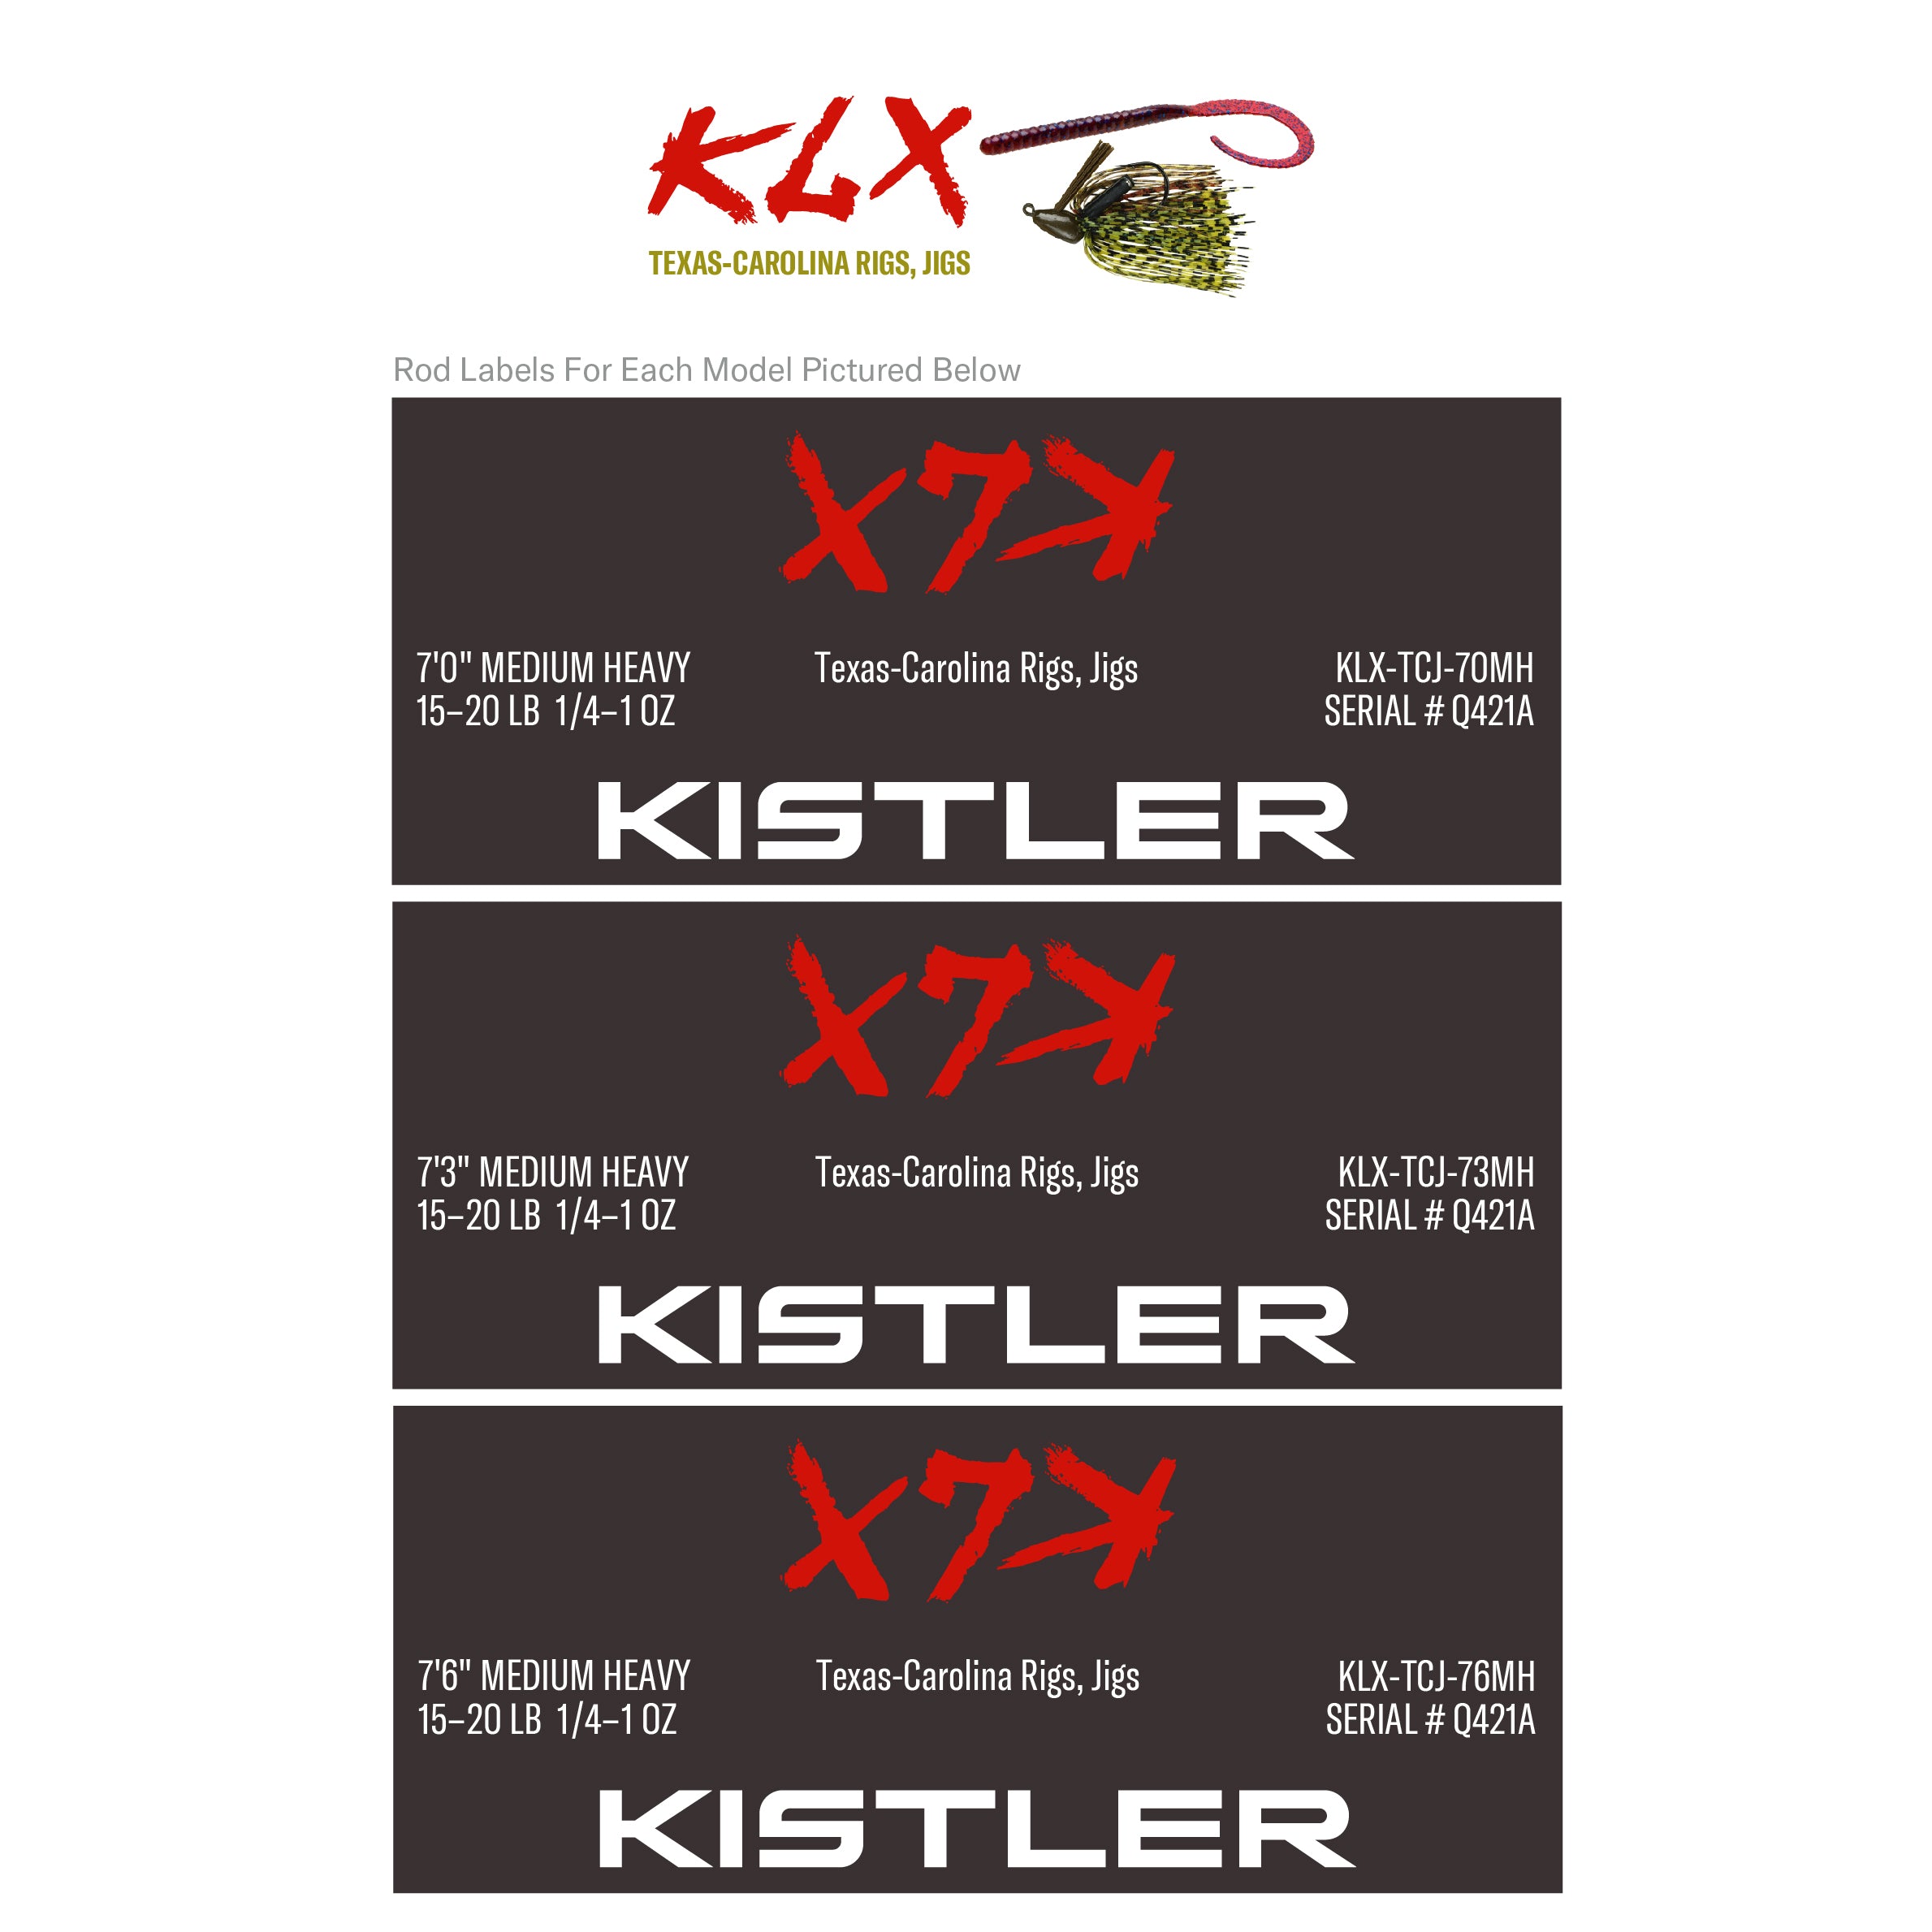 KLX Texas-Carolina Rigs, Jigs, Casting Rods – KISTLER Fishing